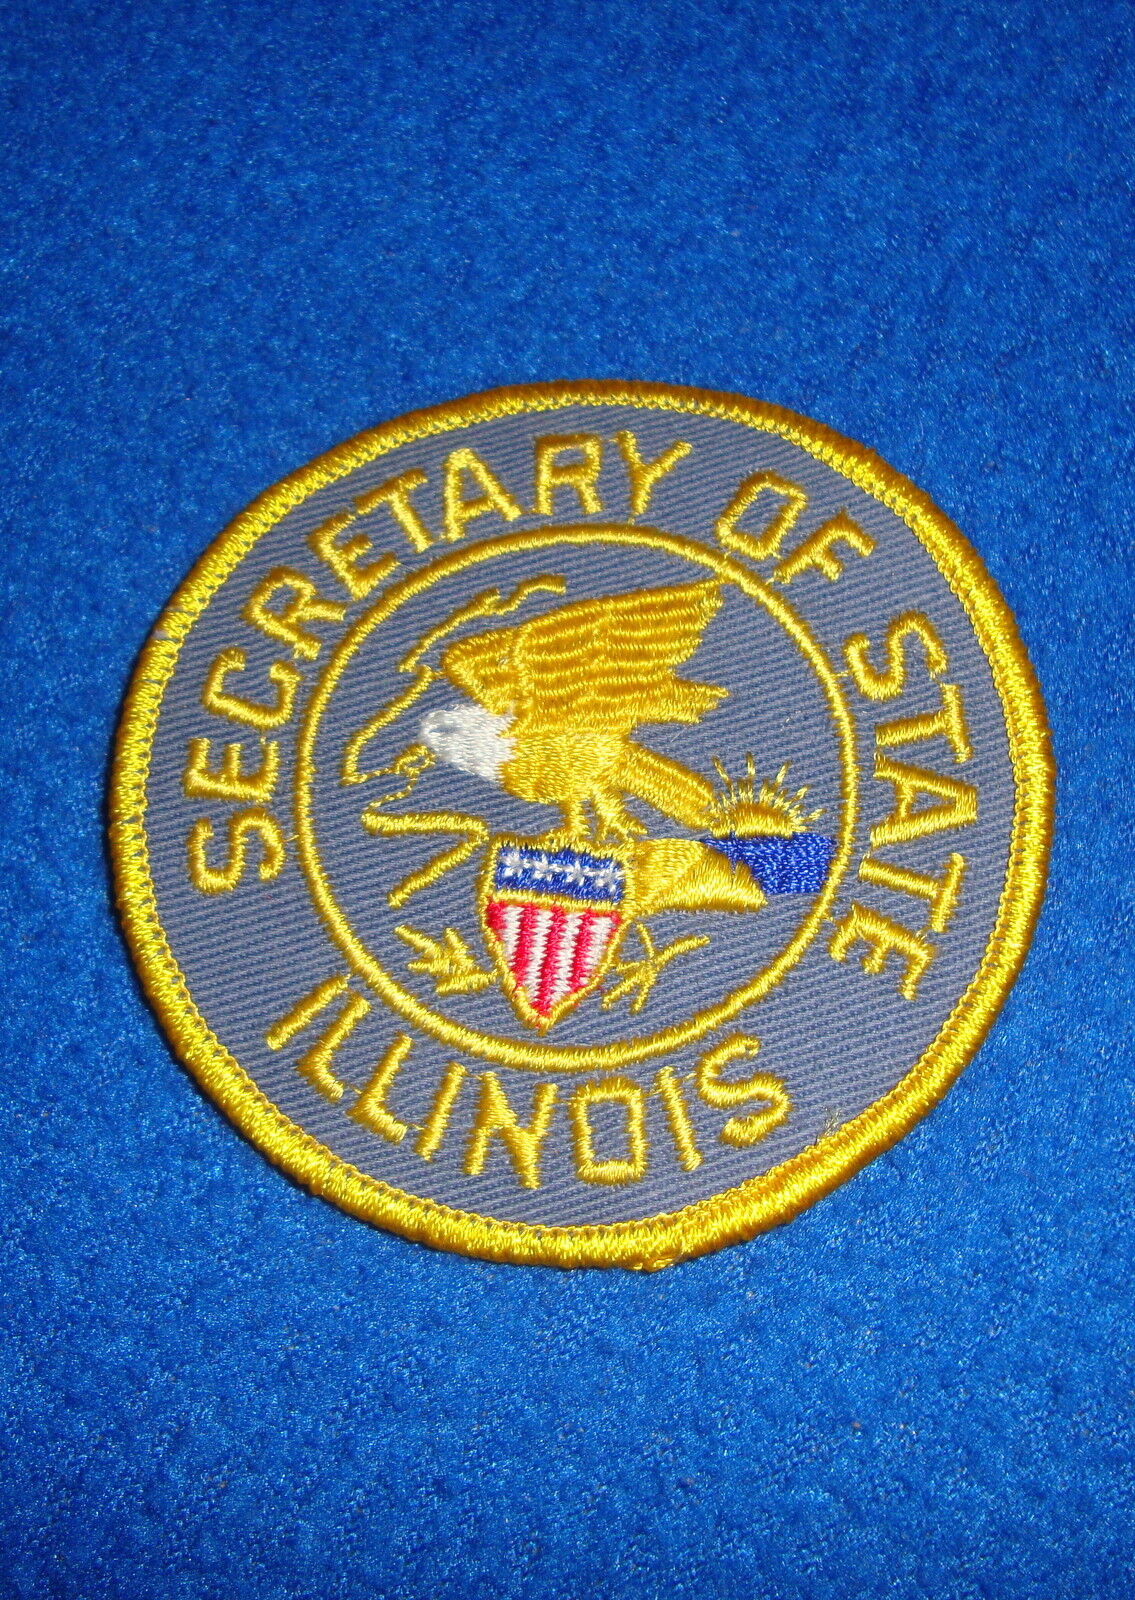 Vintage Secretary of State Illinois Patch